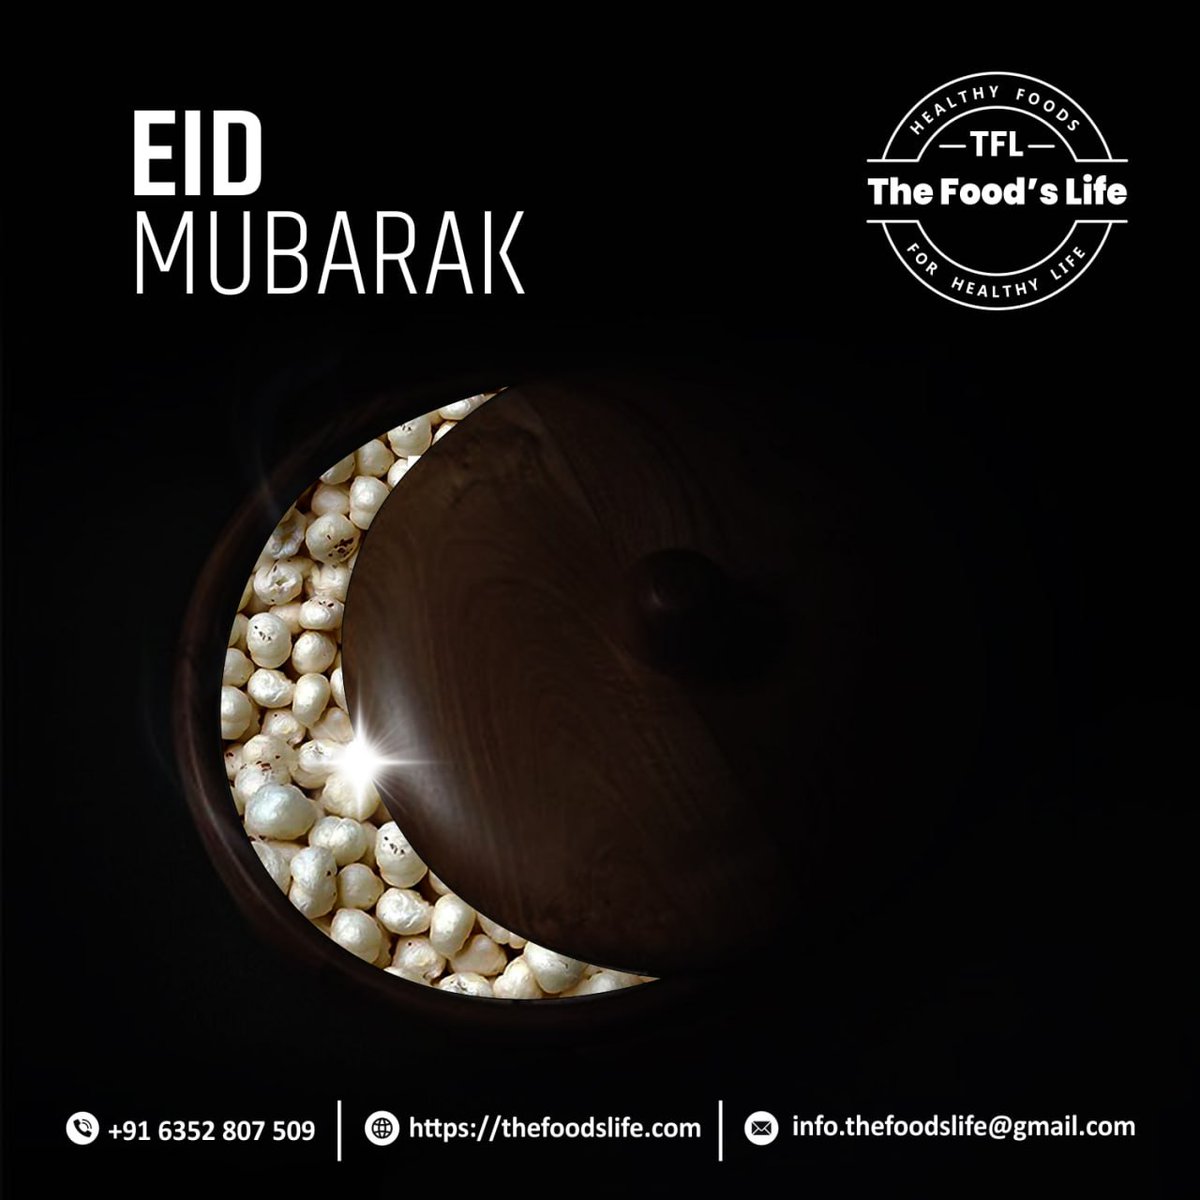 Eid Mubarak! Joy, blessings, and peace to all
.
#eidcelebrations  #eid2024  #festivevibes  #familytime  #traditionalattire  #eidmubarak  #JoyousMoments  #CulturalTraditions   #specialmoments  #eidparty  #thefoodslife